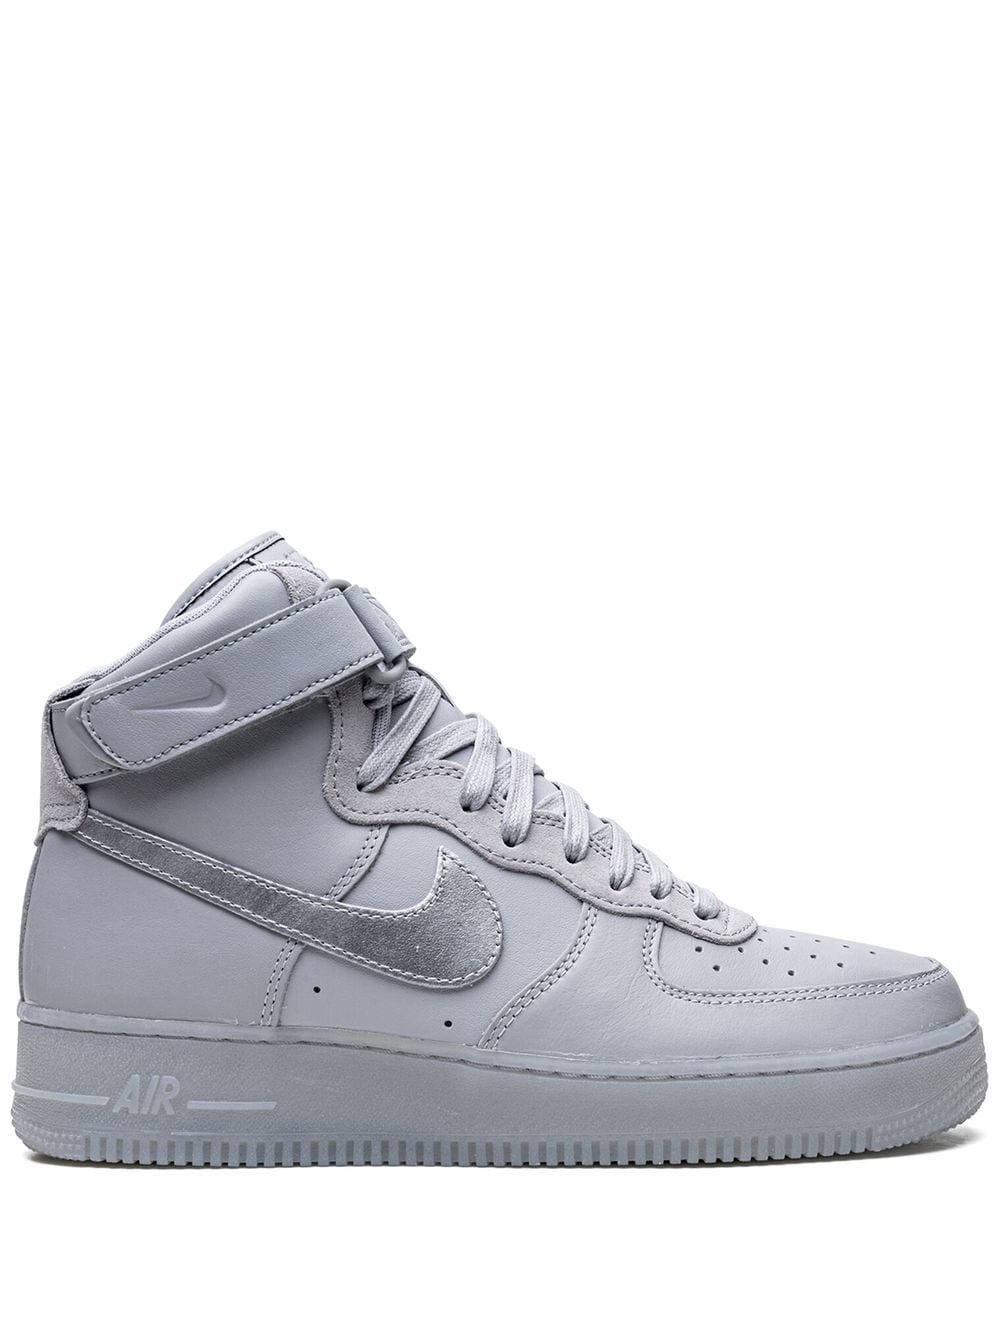 Nike Air Force 1 High "Grey Volt" sneakers von Nike